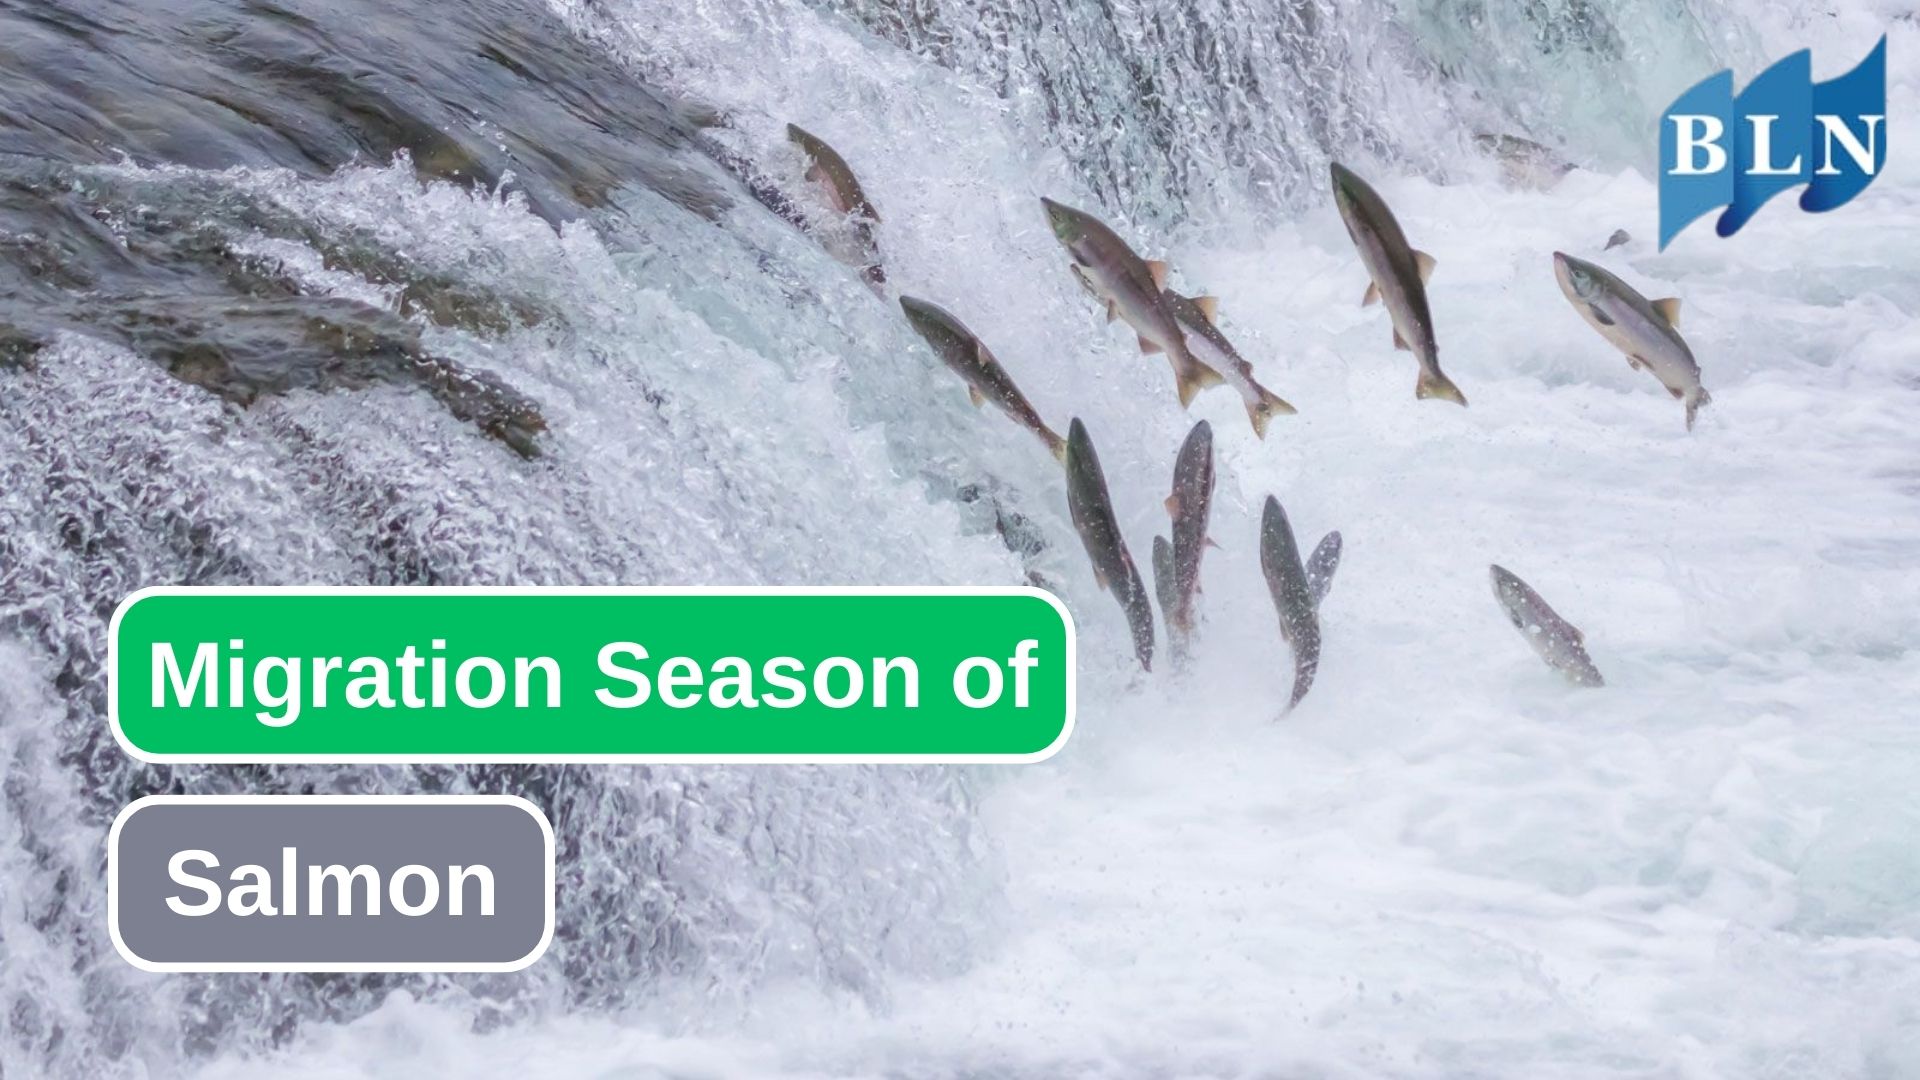 The Migration Season of Salmon